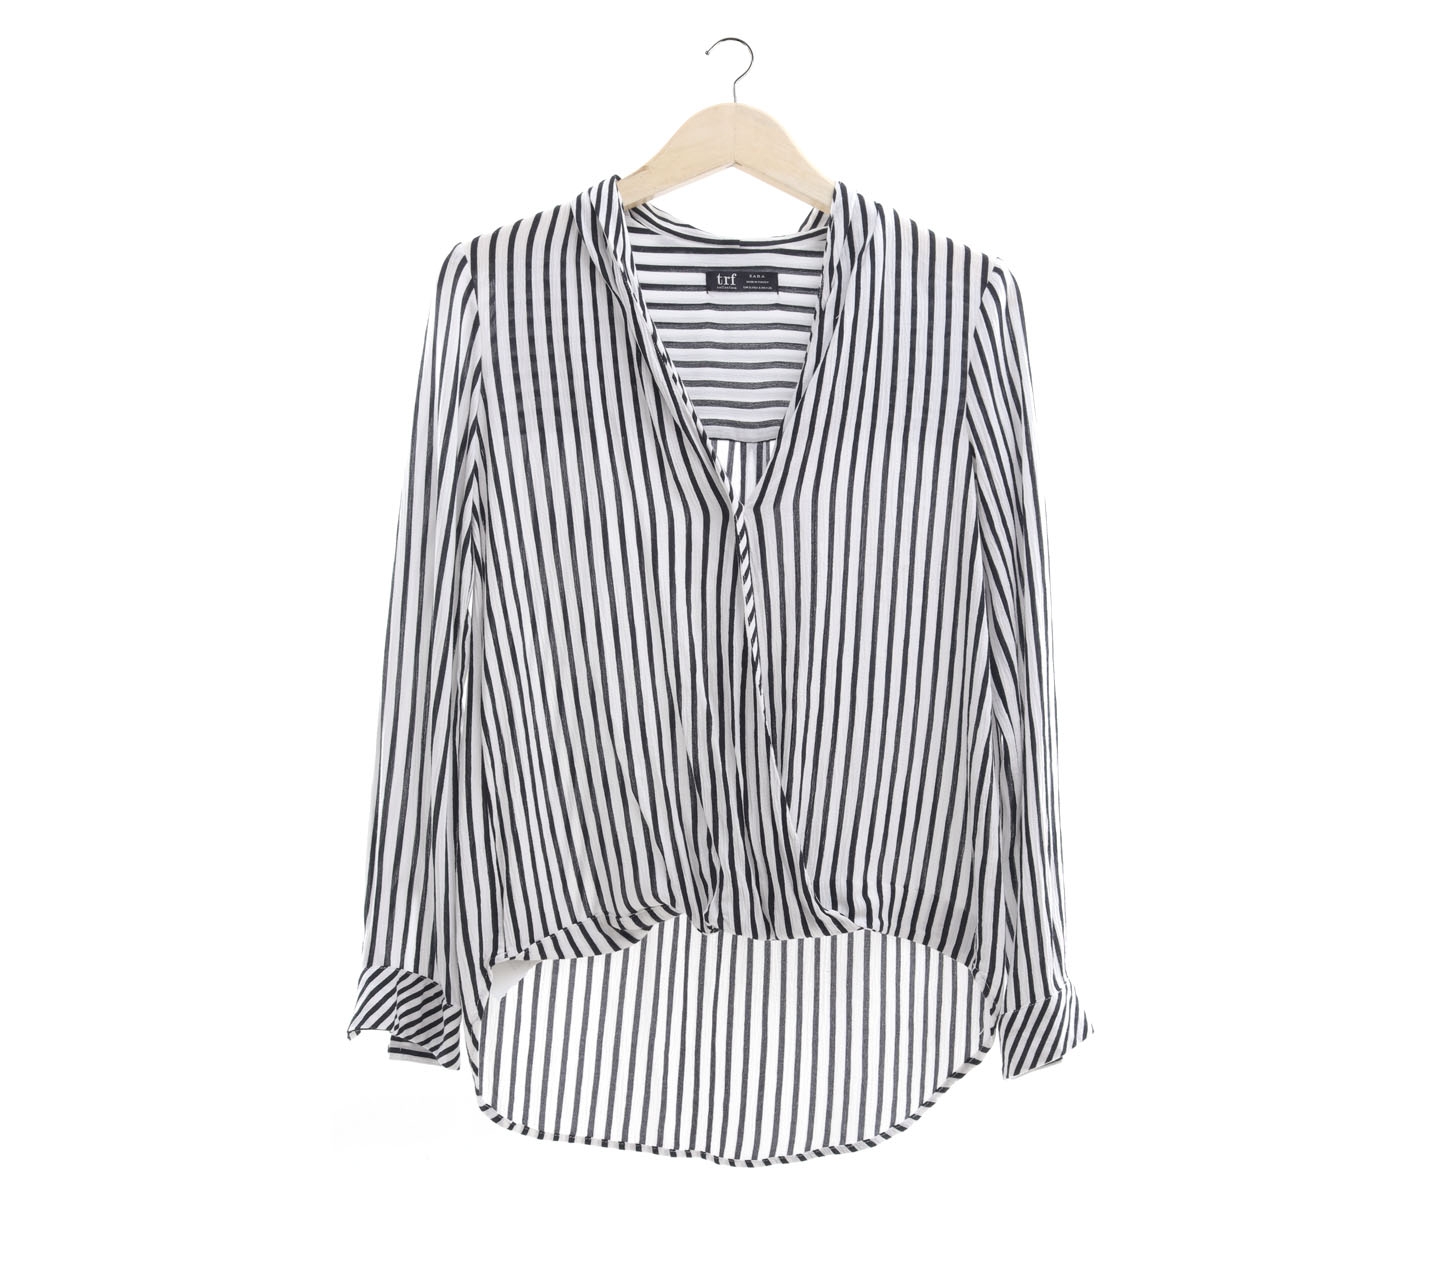 Zara Black & White Striped Blouse